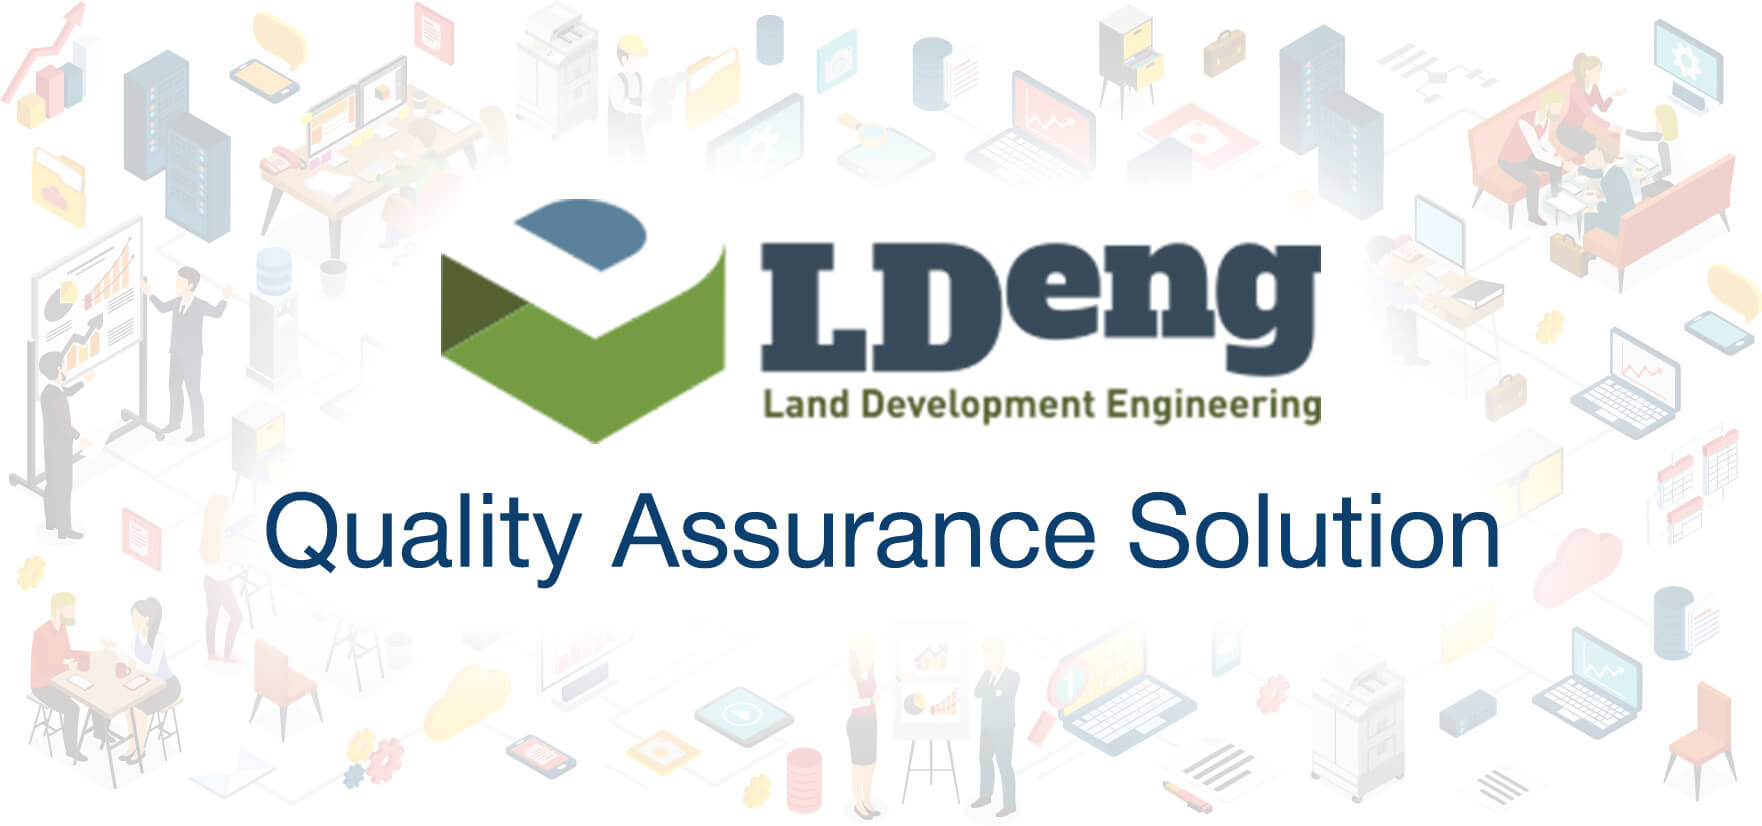 LD Eng: Quality Assurance Solution